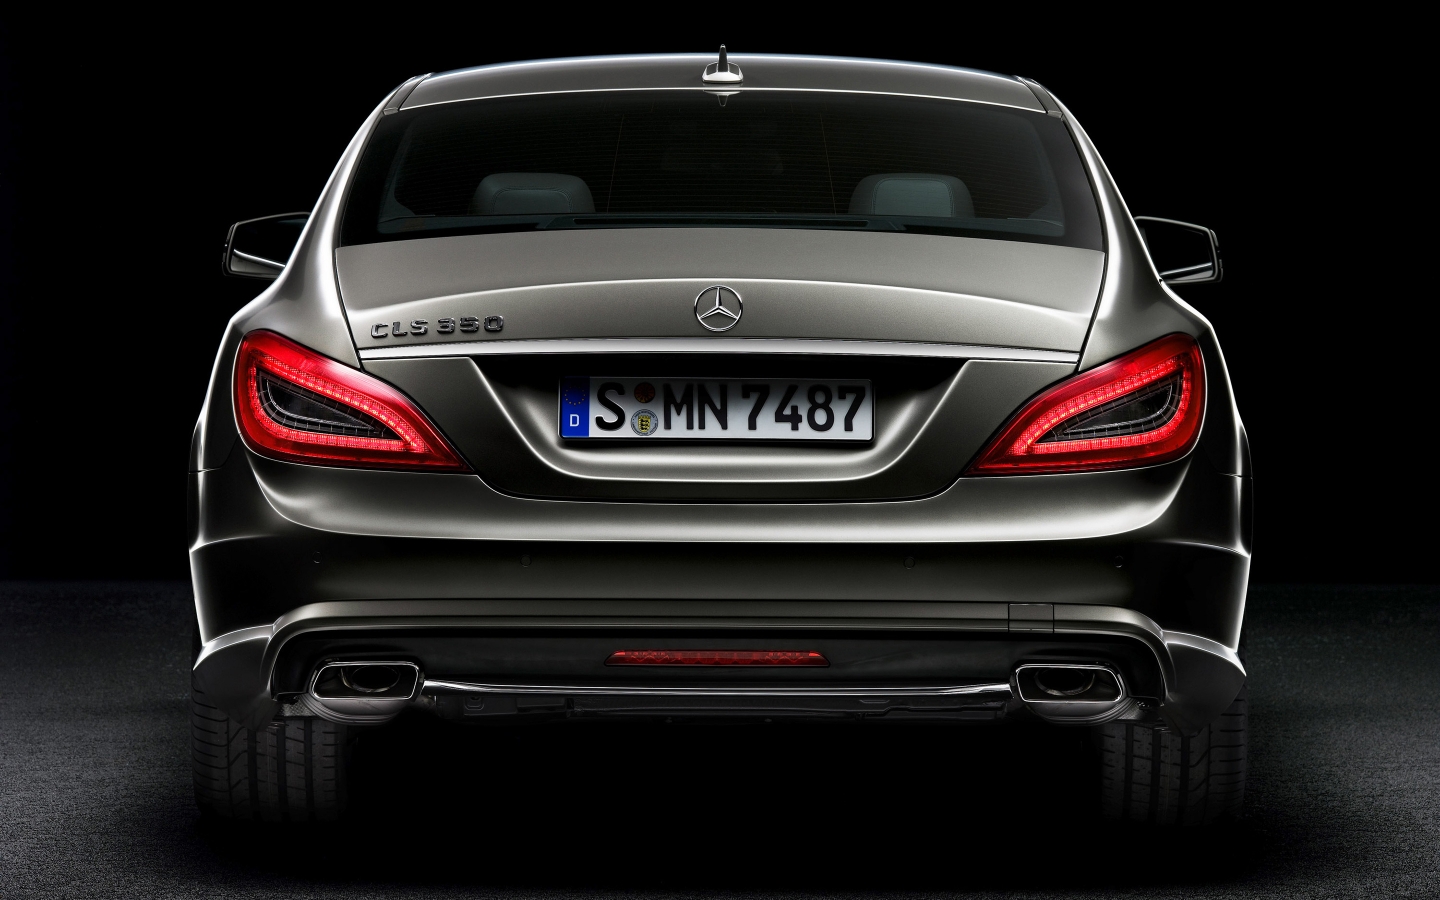 2012 Mercedes Benz CLS Rear for 1440 x 900 widescreen resolution